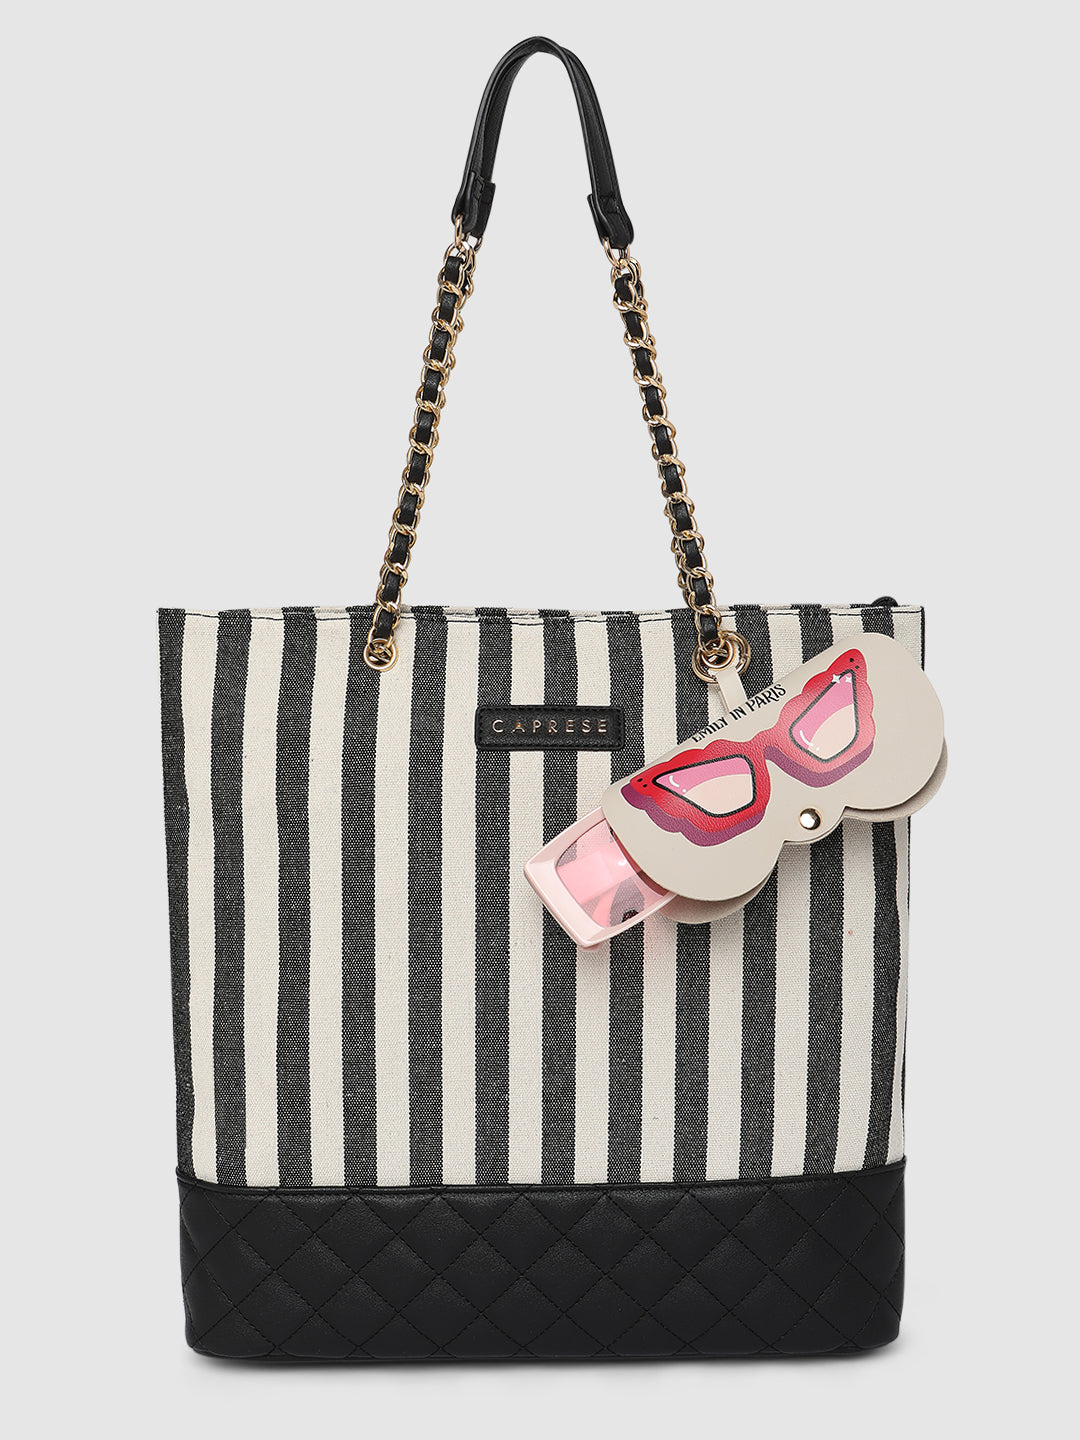 Kate Spade green and white stripe bag | Striped bags, Kate spade tote bag,  Bags